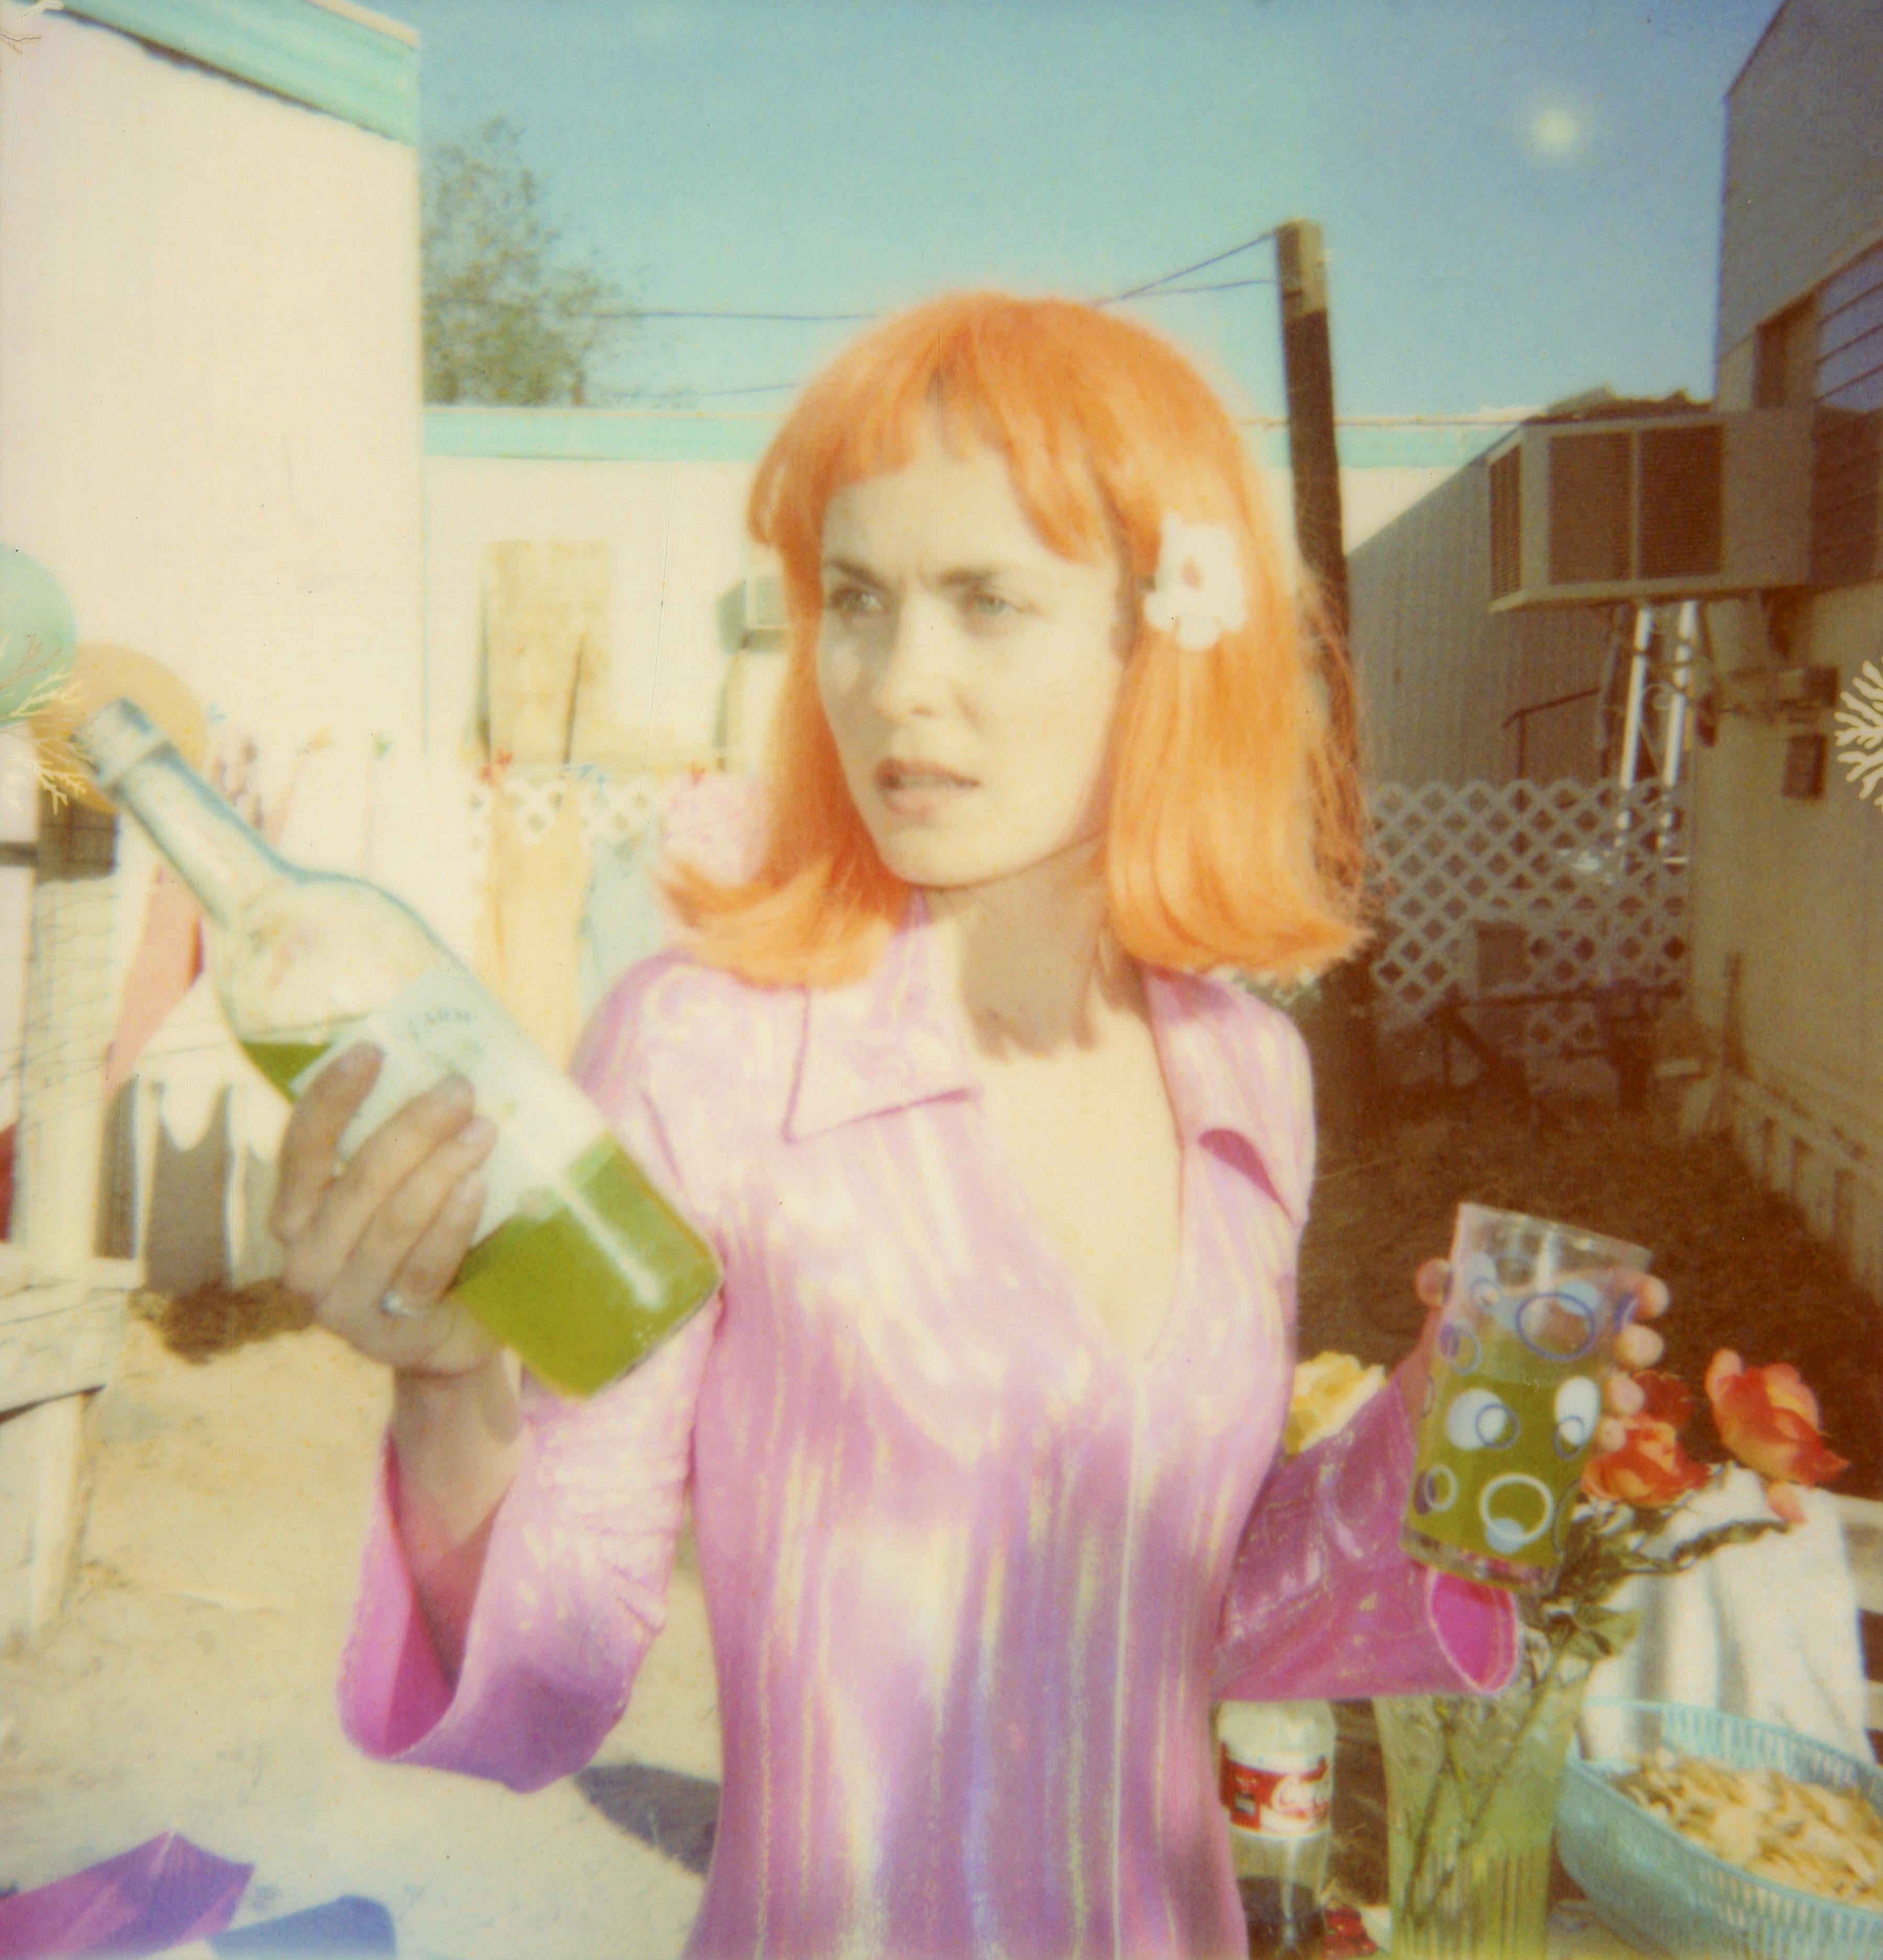 Color Photograph Stefanie Schneider - American Pie (Le 30e anniversaire d'Oxana) avec Radha Mitchell - Polaroid